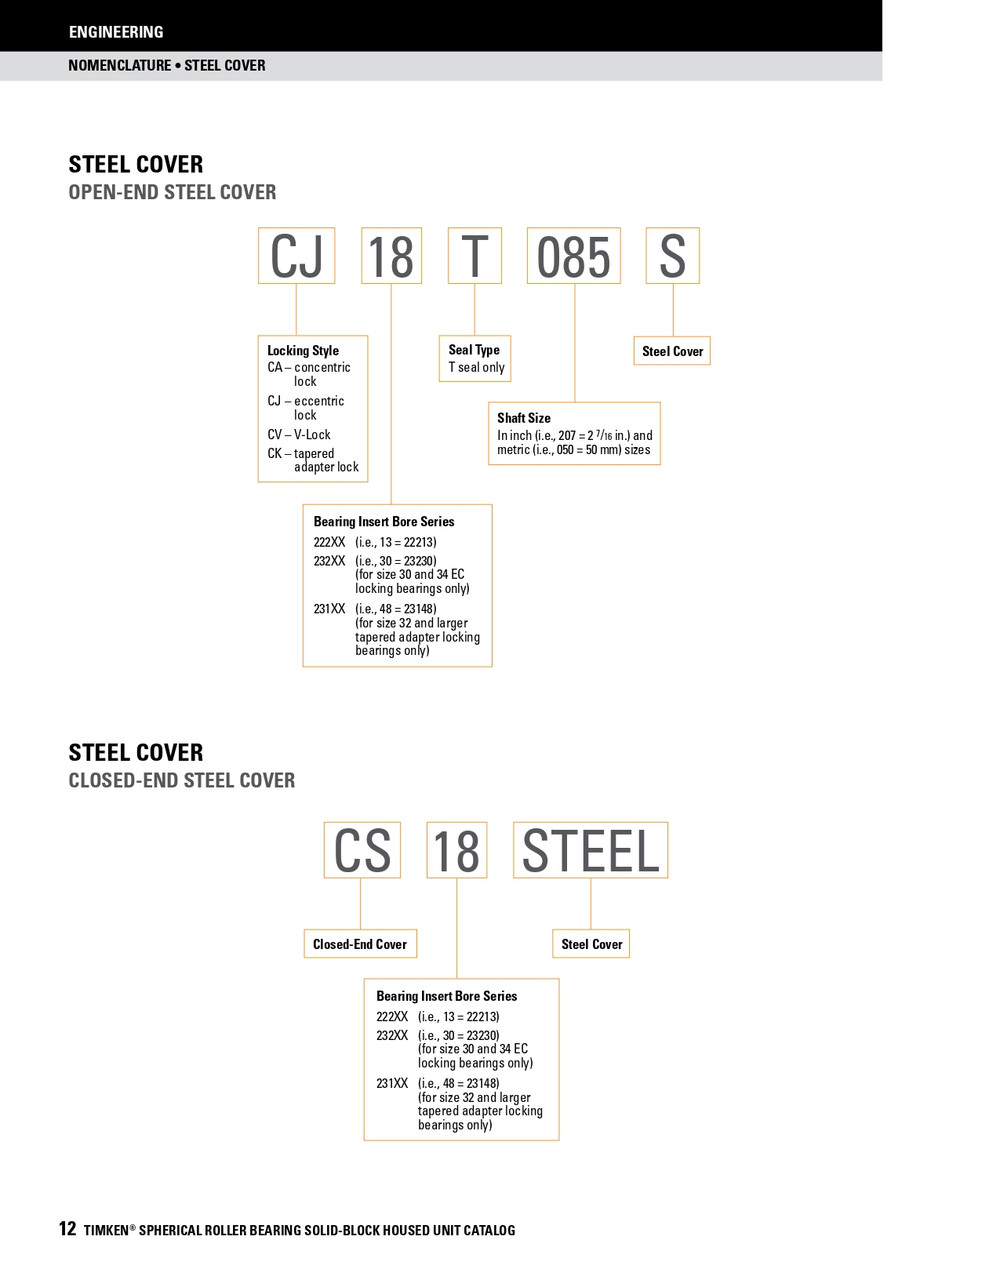 90mm Timken SRB Steel Open End Cover w/Teflon Seal - QV V-Lock® Type   CV19T090S